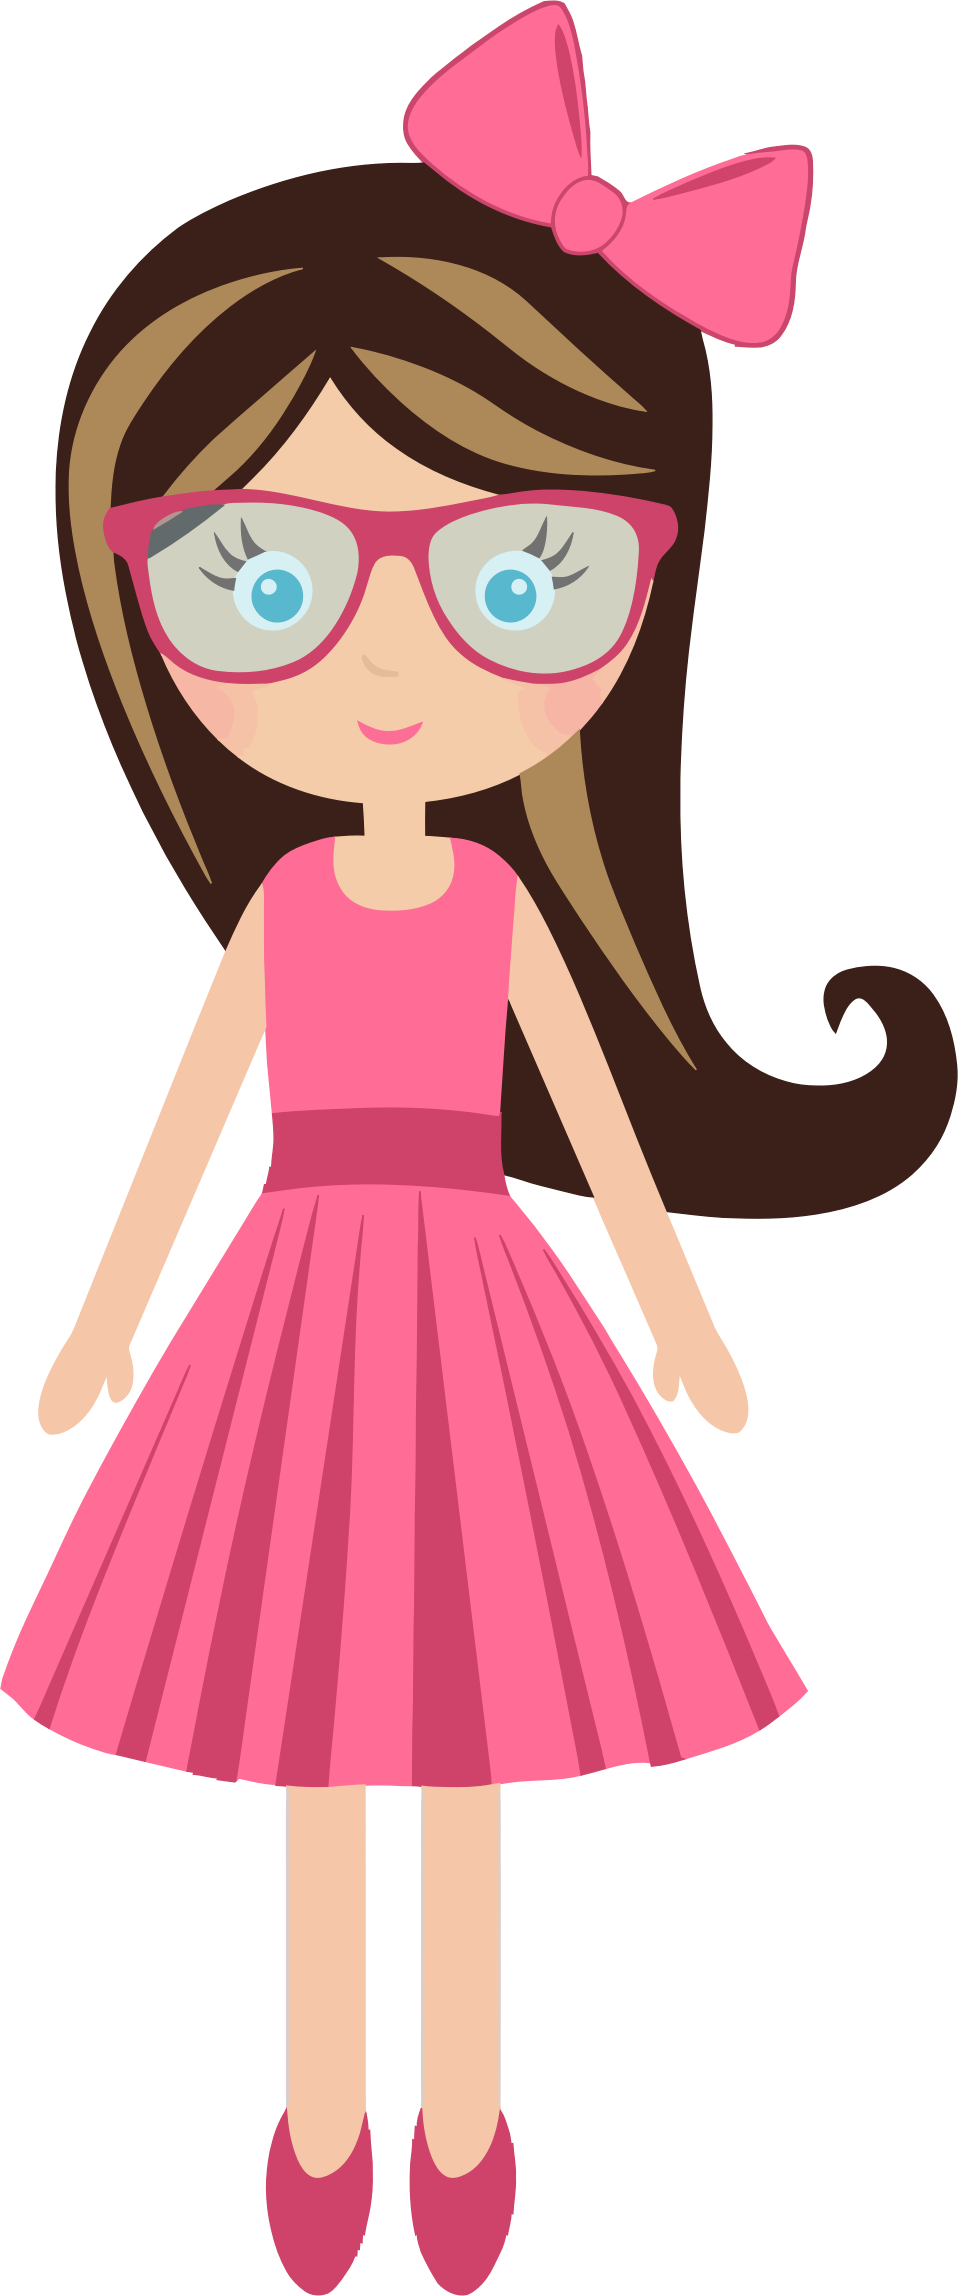 A Cartoon Of A Girl In A Pink Dress